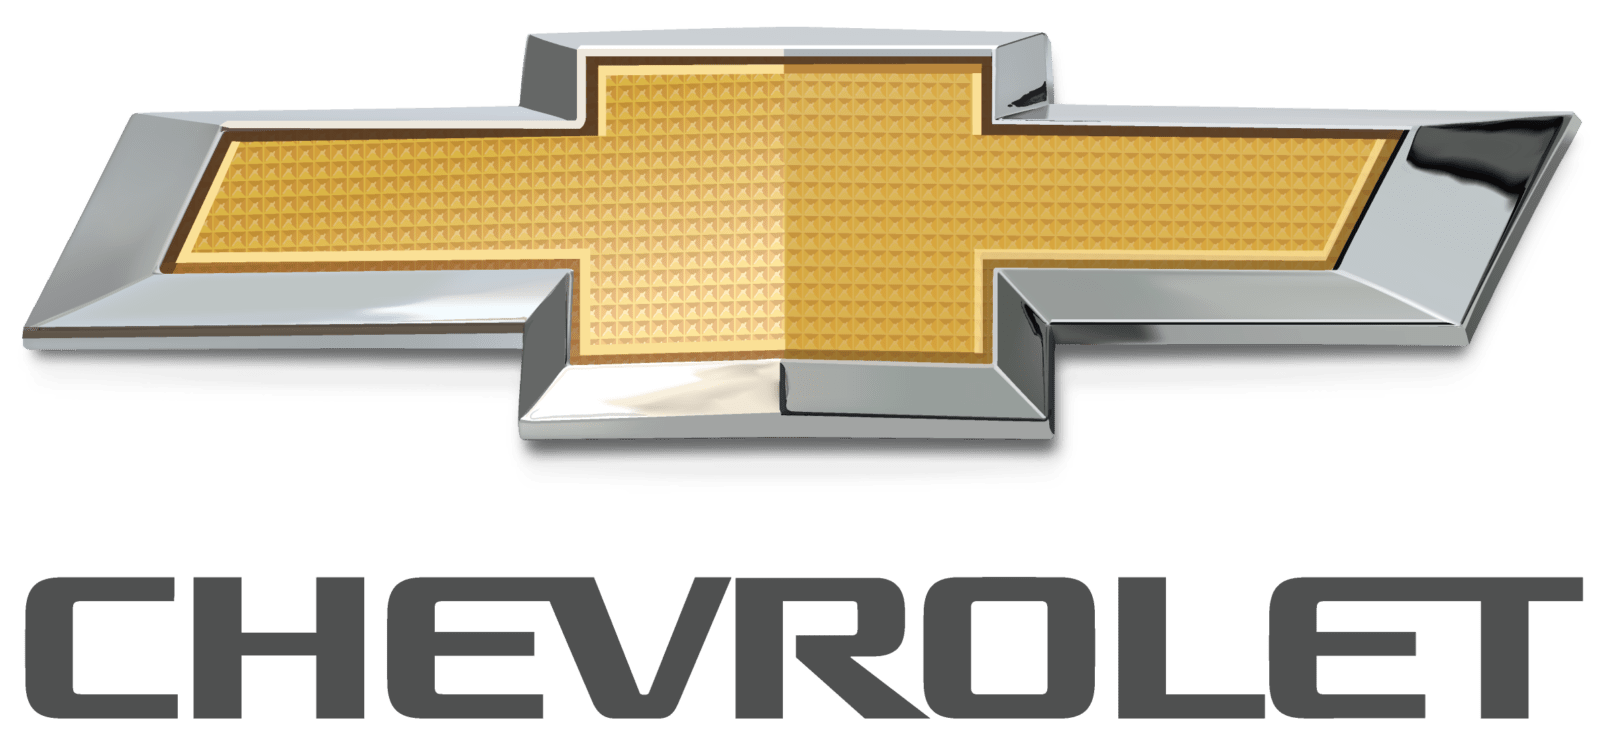 American-chevrolet-car-logo-download